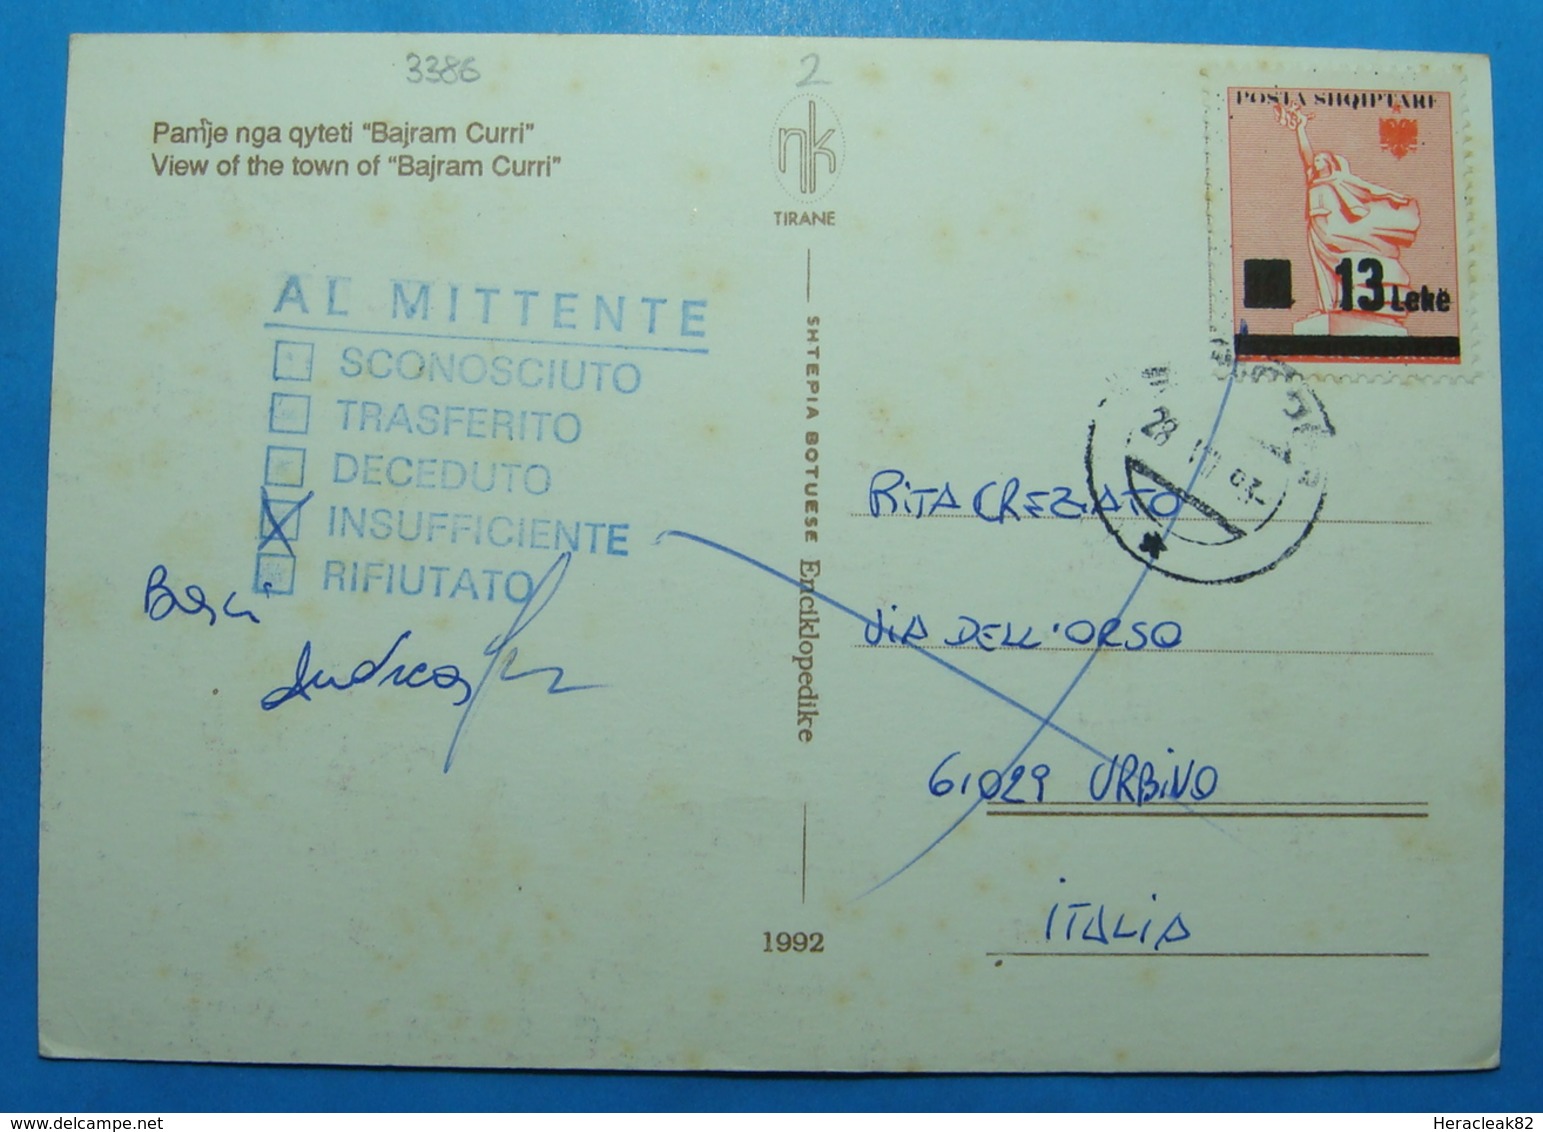 1993 ALBANIA Postcard BAJRAM CURRI Sent From Shkoder To URBINO Italia, Returrned, ADRESSE INSUFFICIENTE RARE - Albania